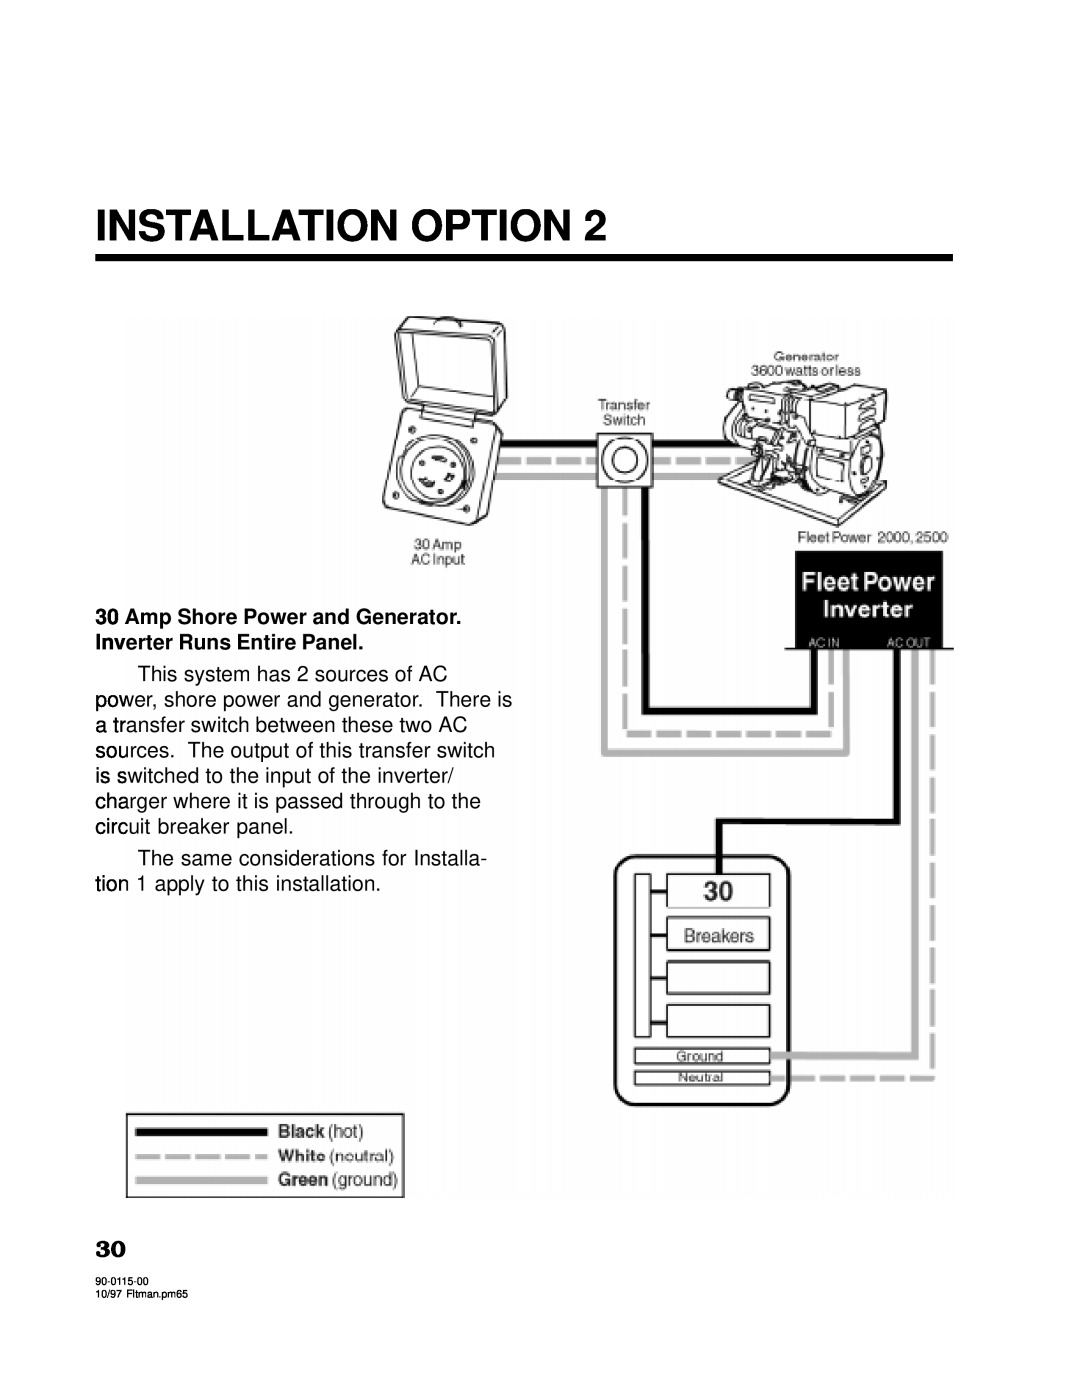 Xantrex Technology 2500, 2000 owner manual Installation Option 